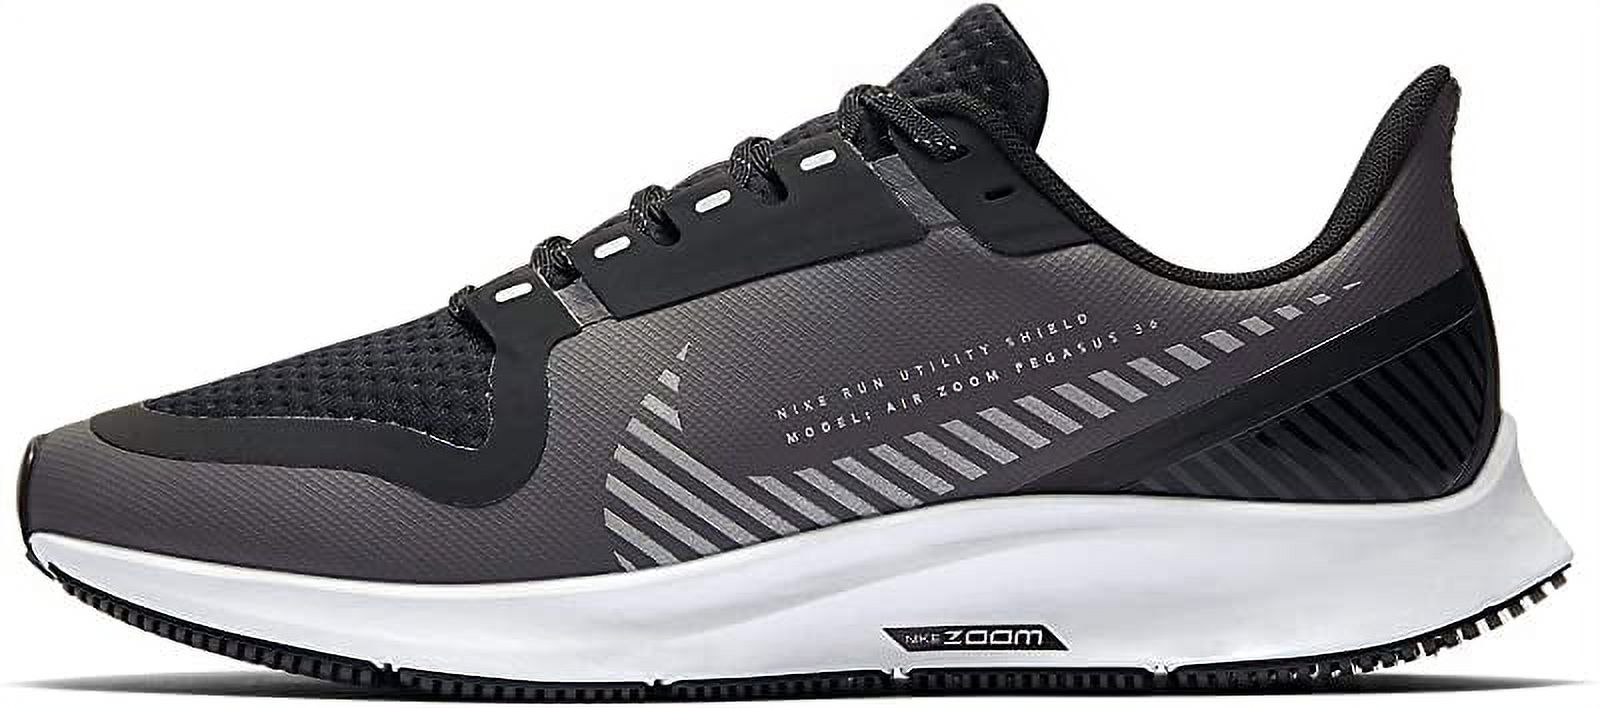 Nike Men's Air Zoom Pegasus 36 Shield Running Shoe, Grey/Black, 8 D(M) US - image 2 of 4